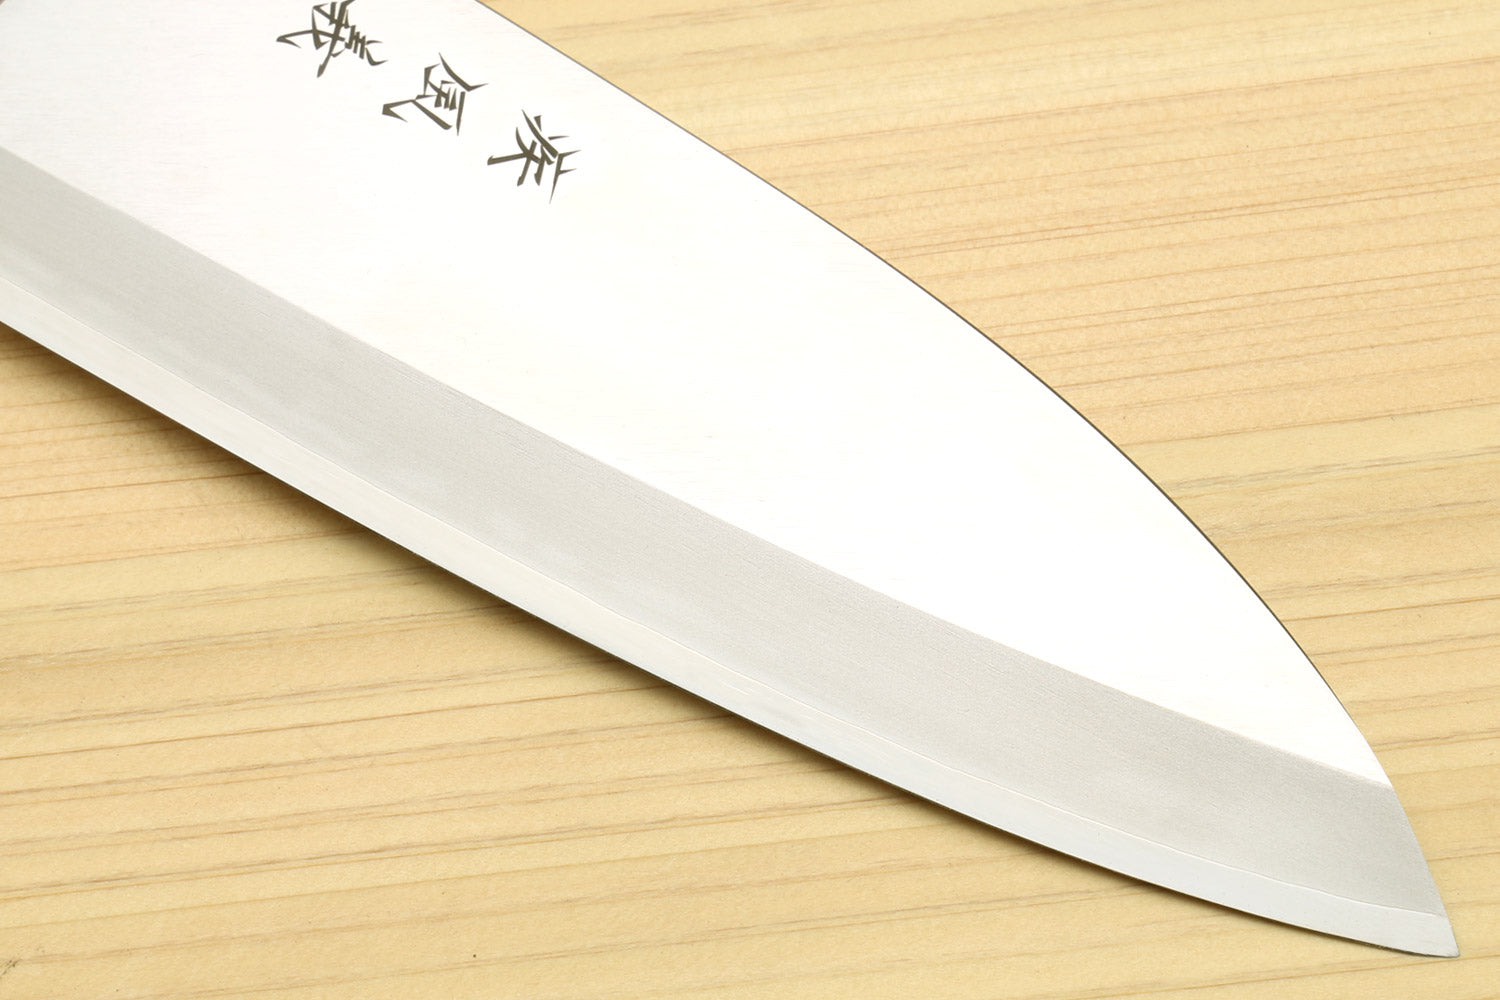 Deba Knife - Fish Filleting/Butchering Premium Japanese Artisanal Knif –  Dream of Japan